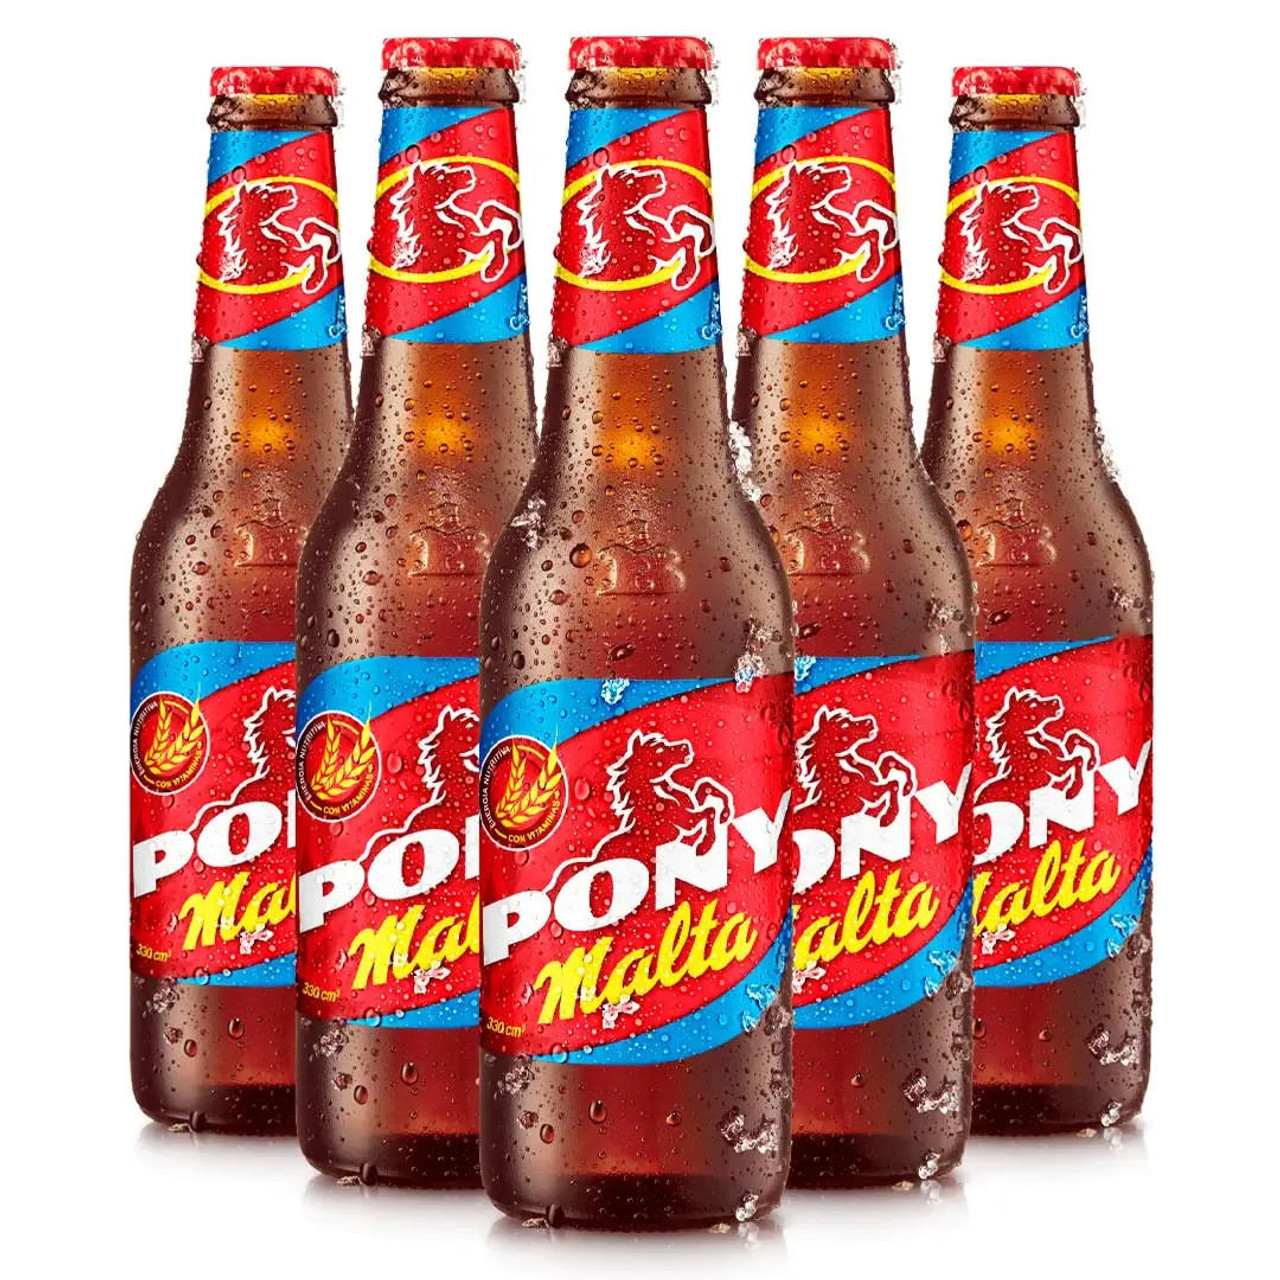  Pony Malta Soda 12 oz (24-Case) - Glass Bottled Non-Alcoholic Malt Beverage: The Authentic Taste of Colombia 